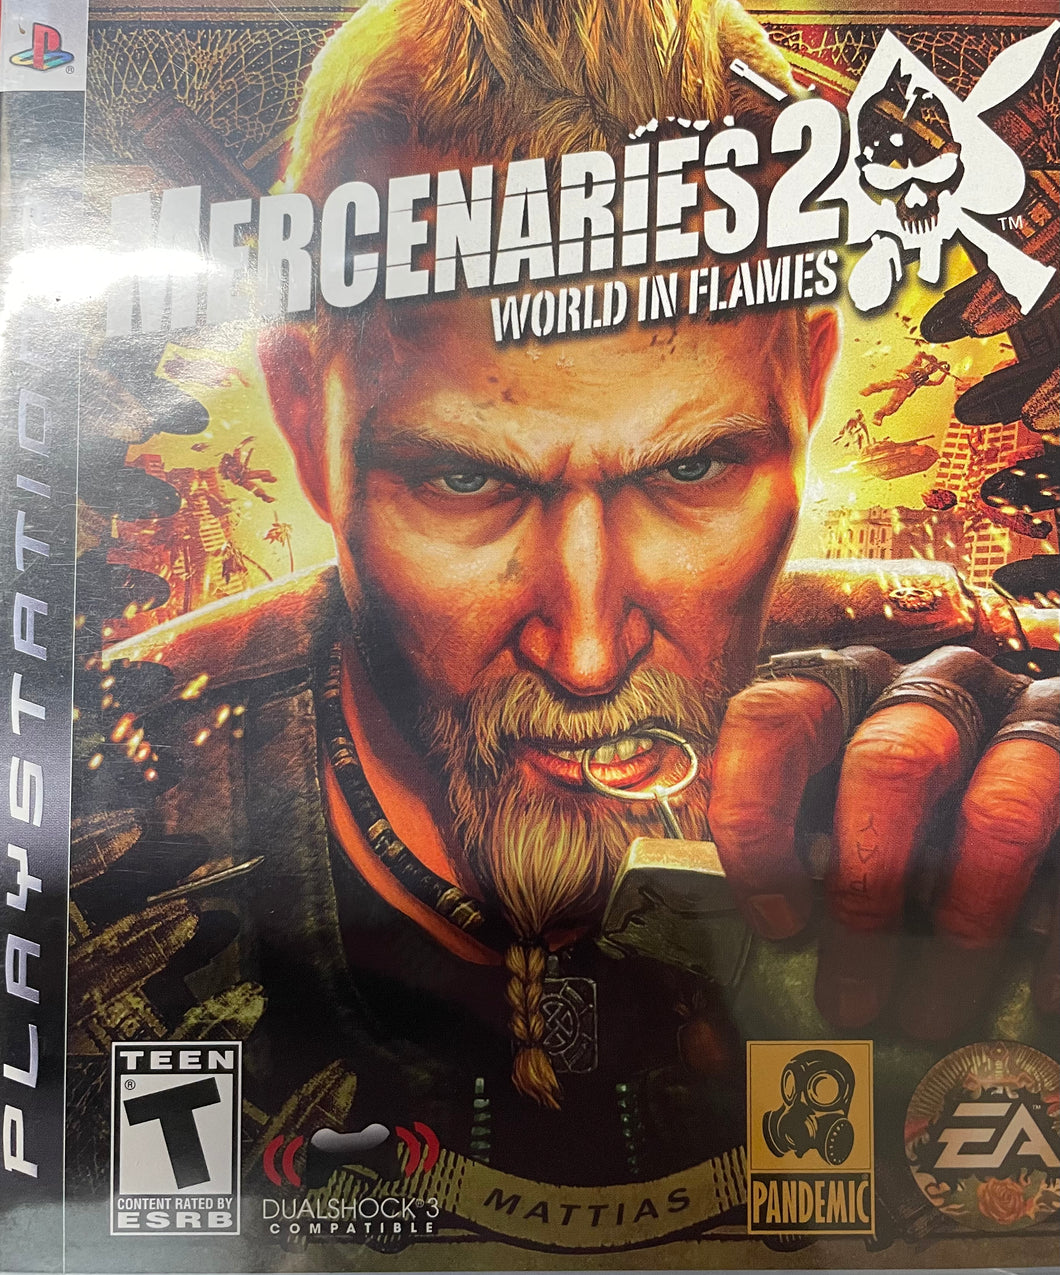 Mercenaries 2 World In Flames Playstation 3